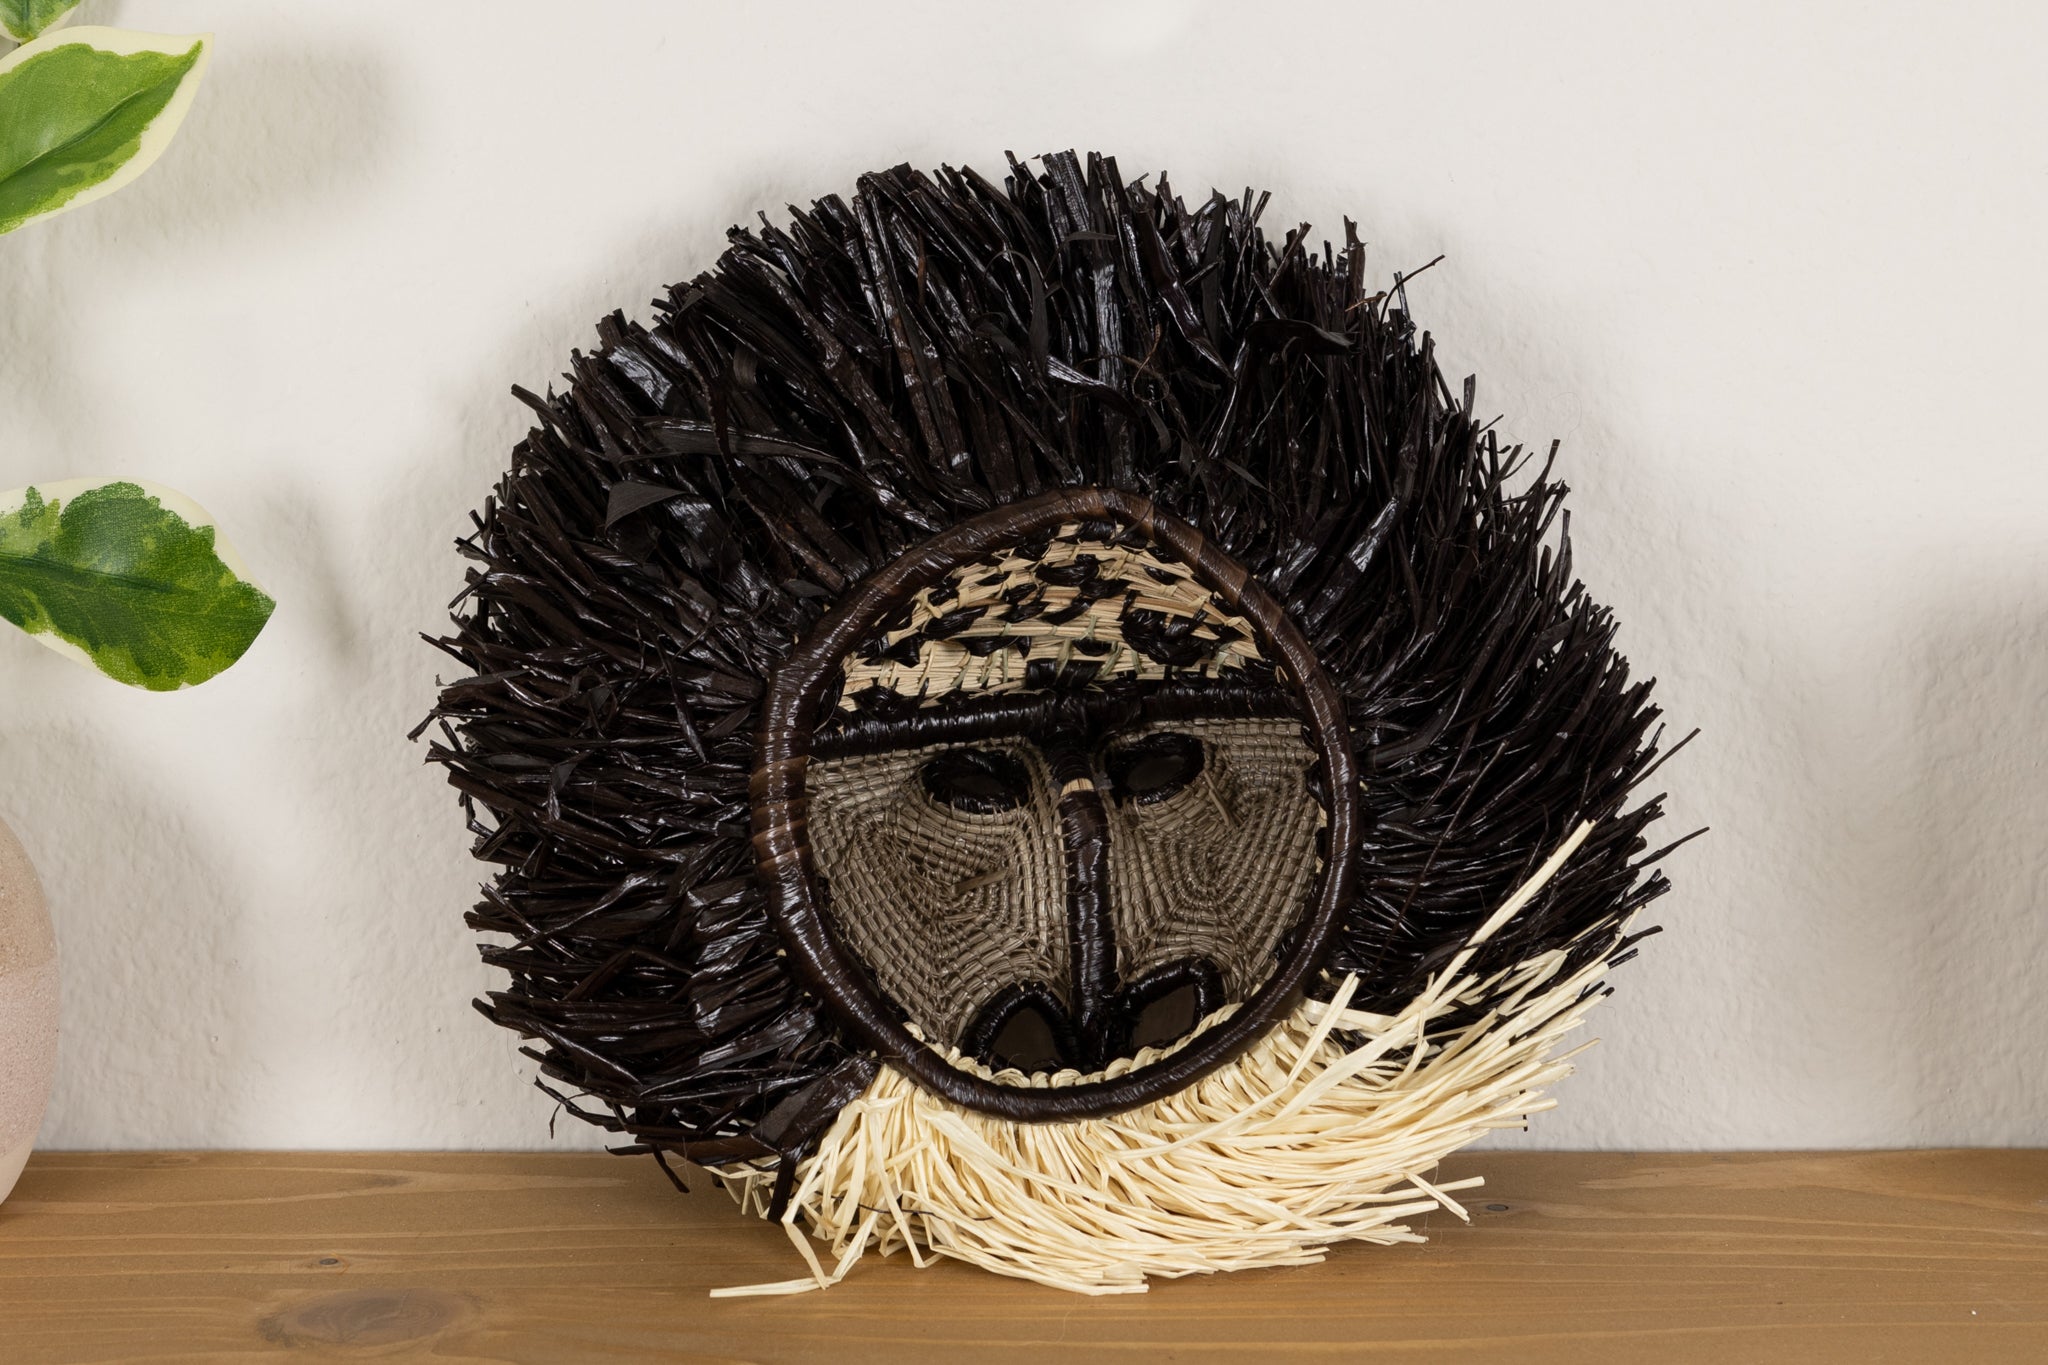 Black Snub-Nosed Monkey Mask